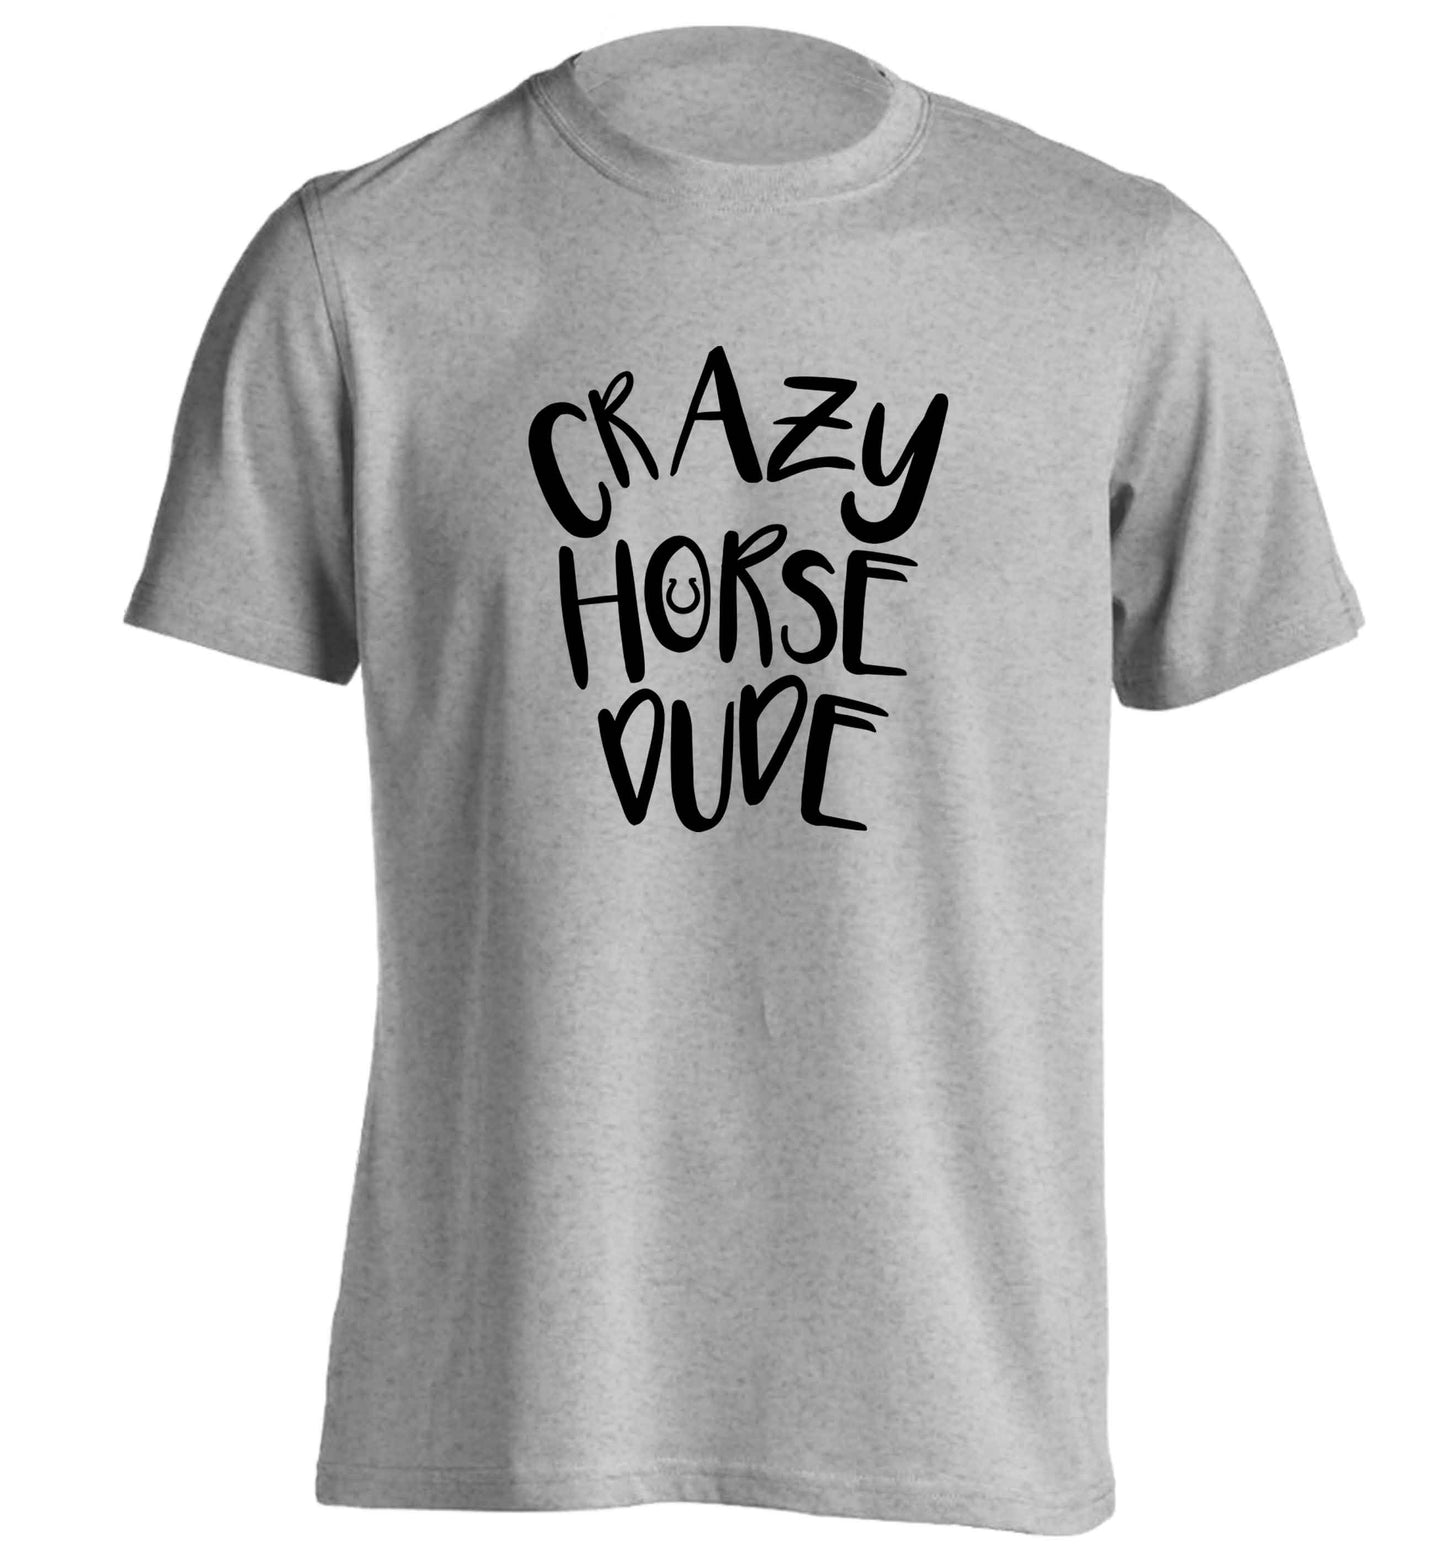 Crazy horse dude adults unisex grey Tshirt 2XL